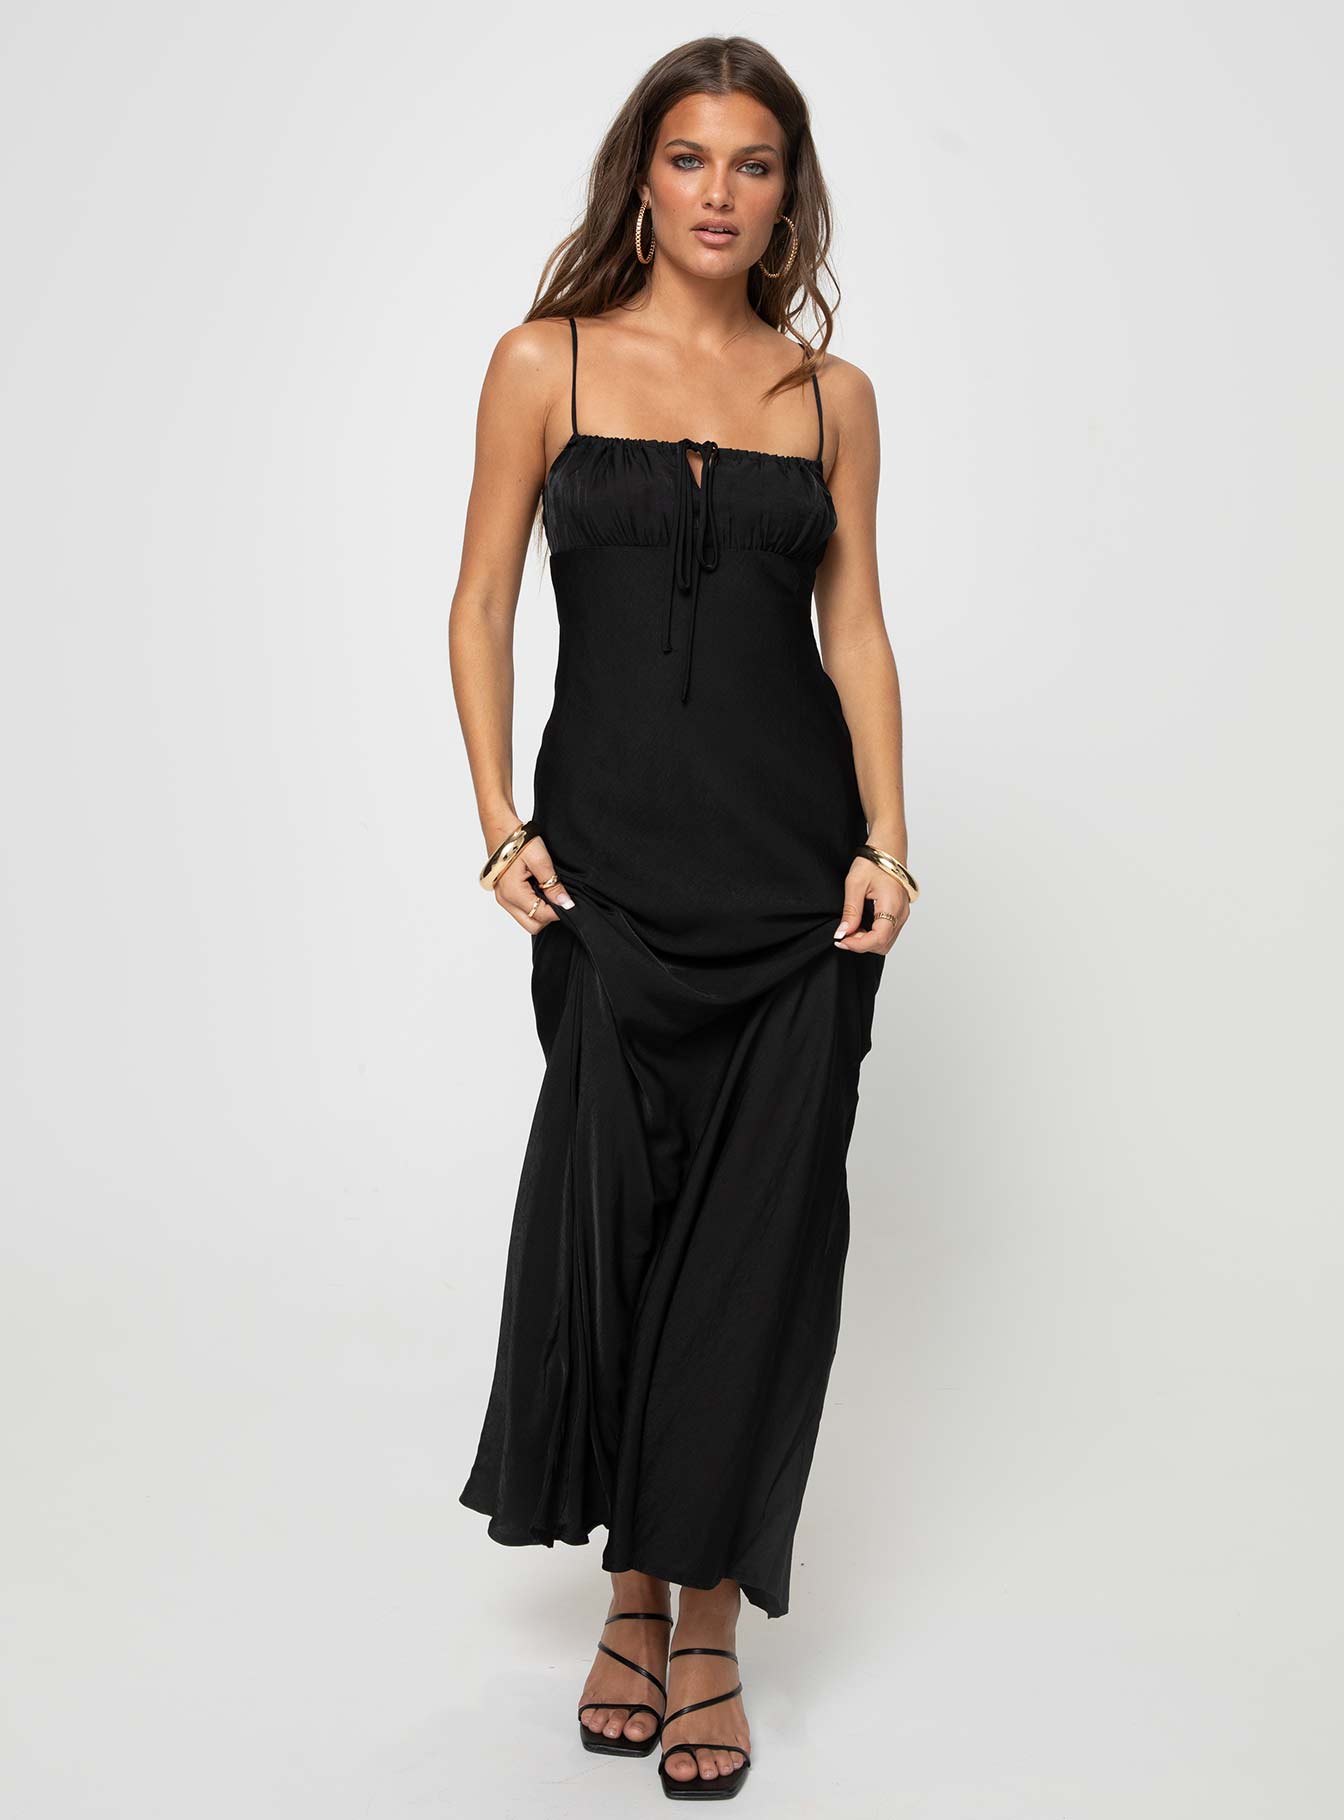 Shop Formal Dress - Noda Maxi Dress Black sixth image